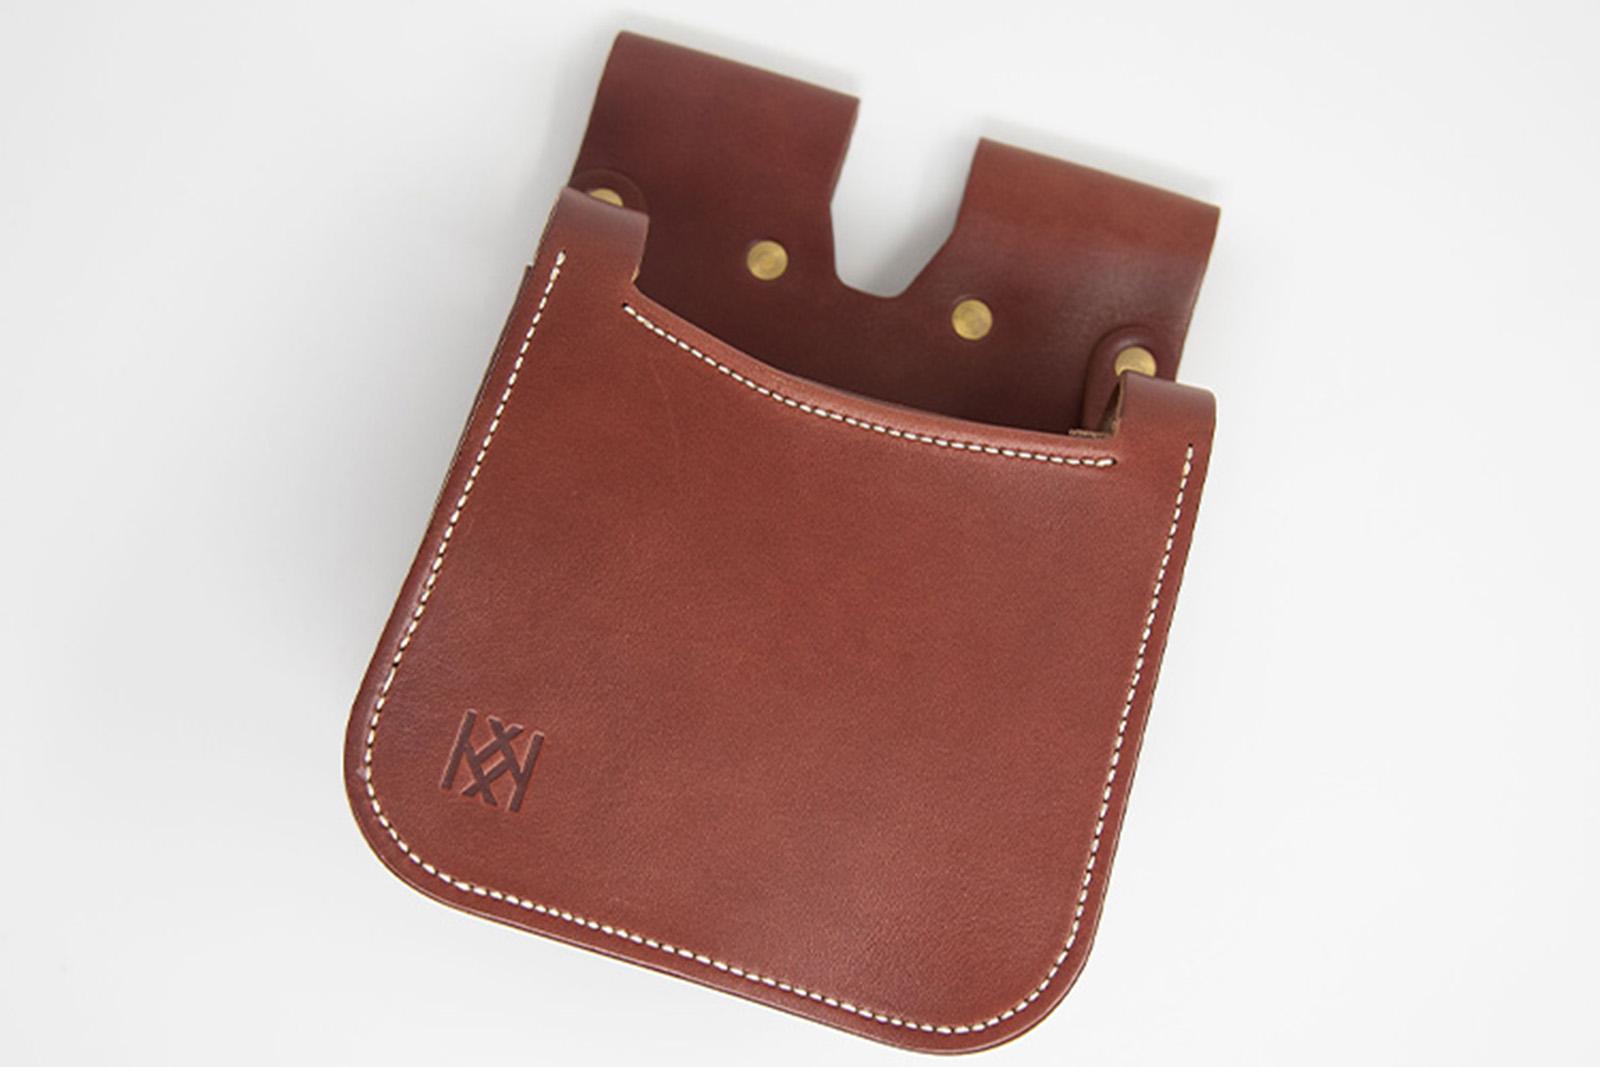 Kingfisher Large Leather Cartridge Bag